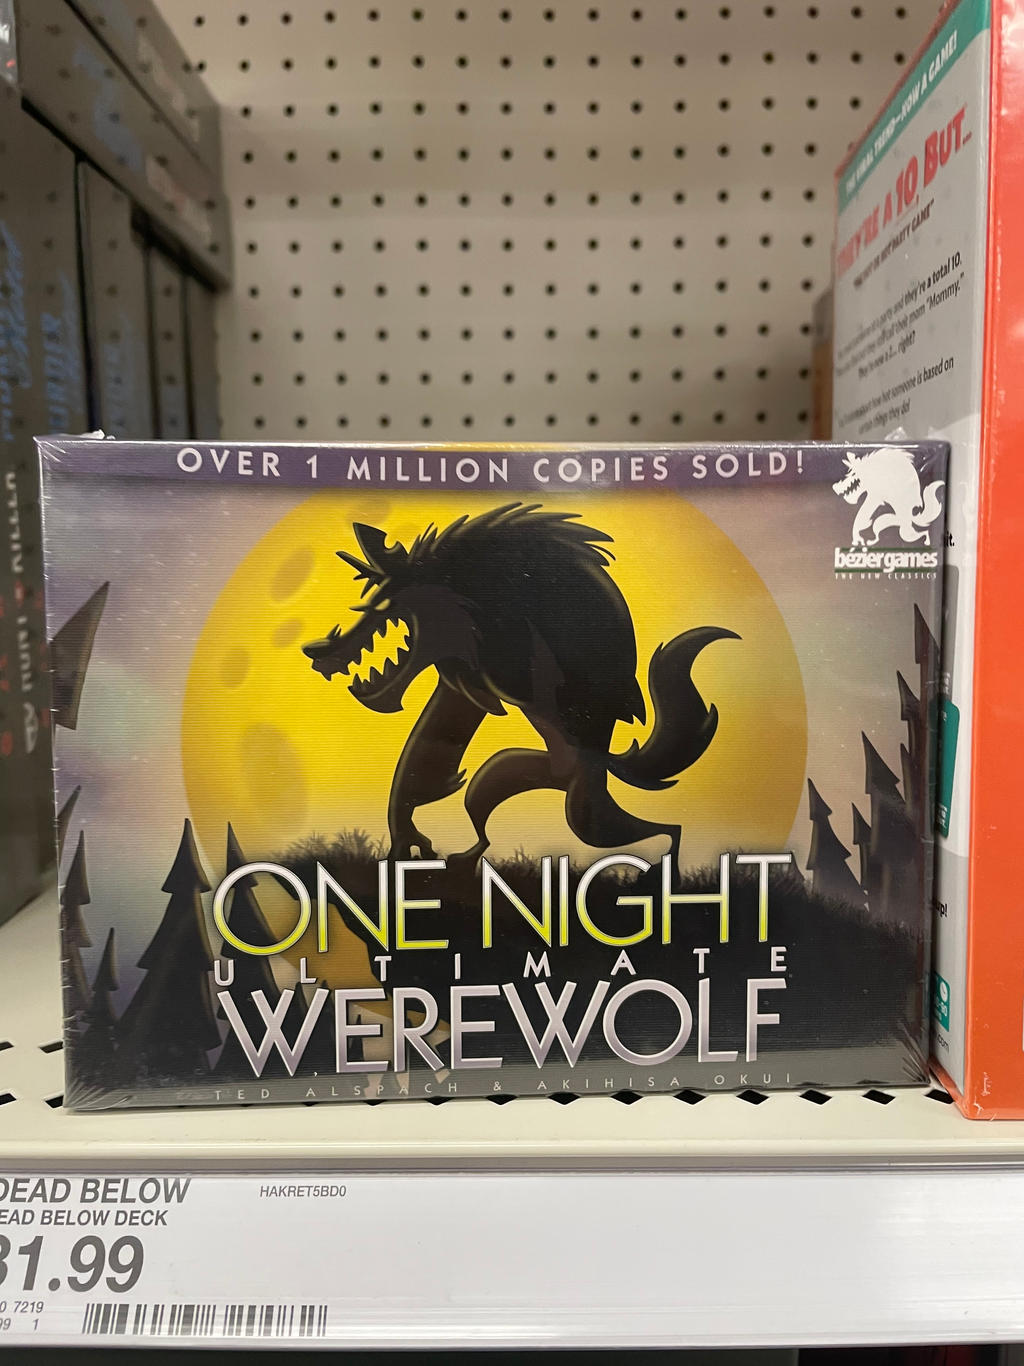 Night of the Werewolf by Uranimated18 on DeviantArt